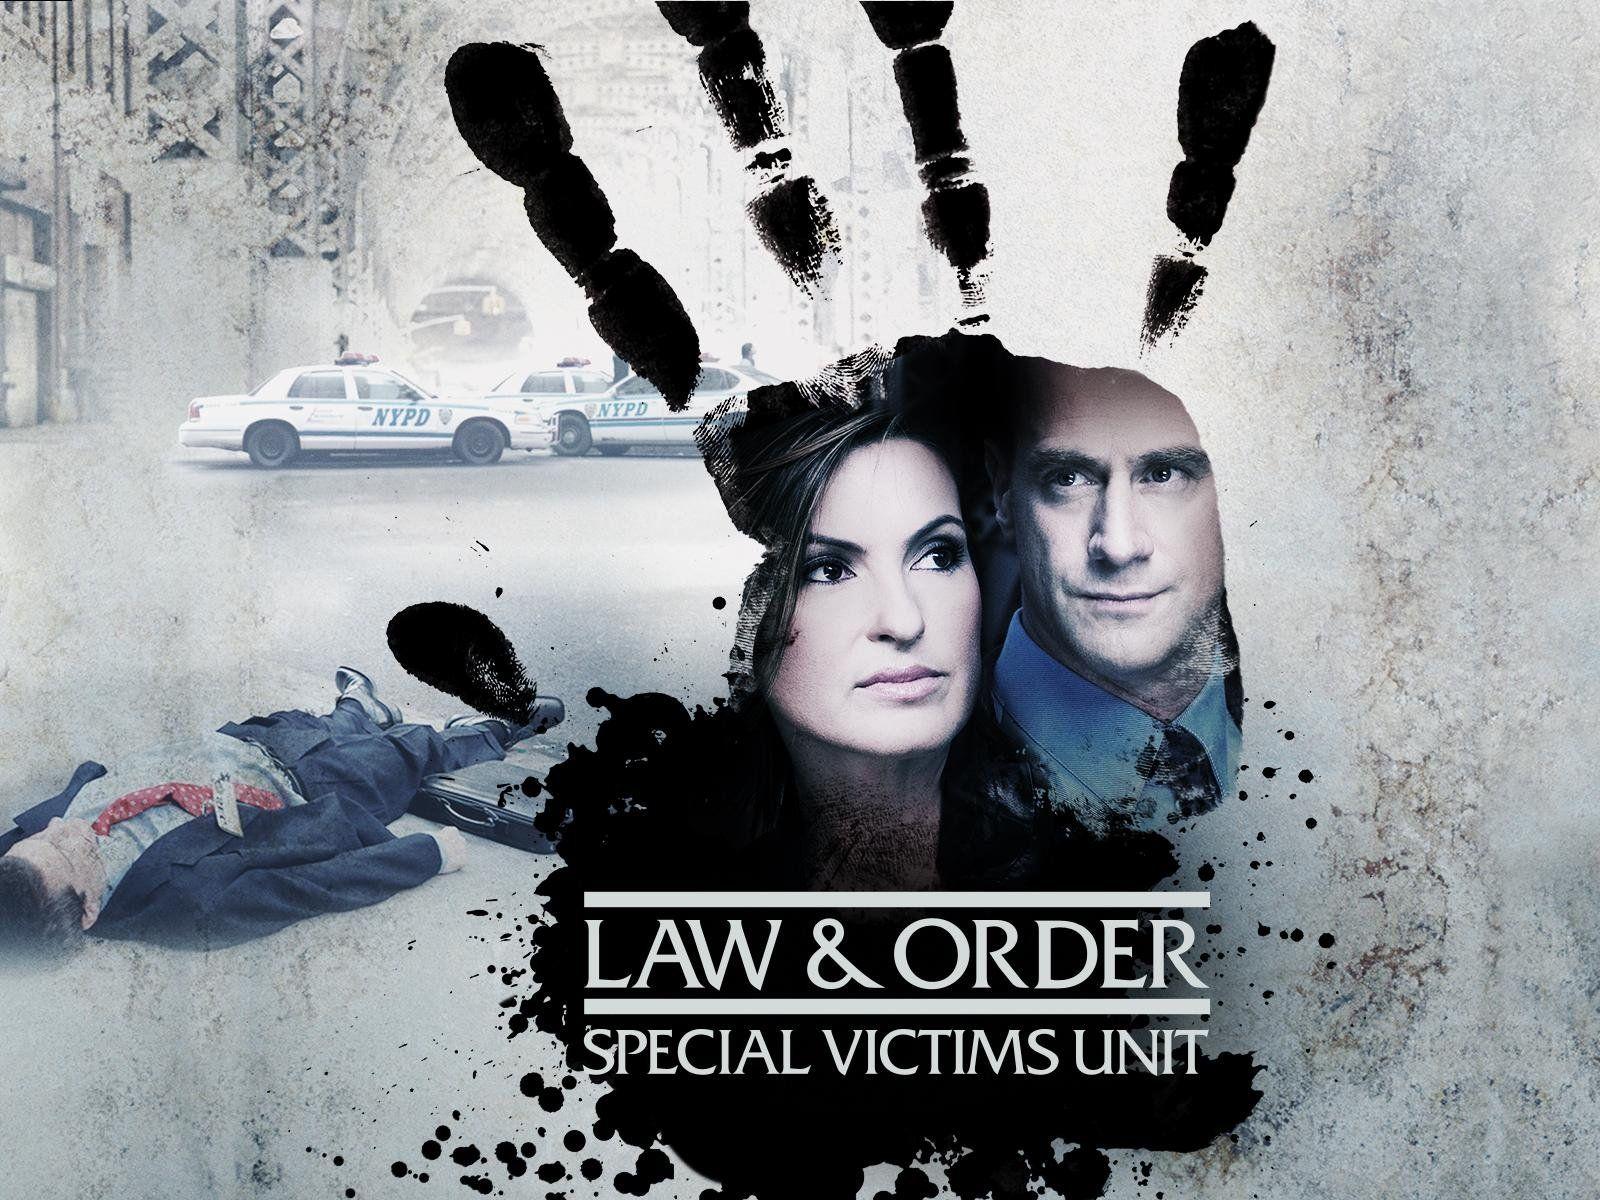 Law & Order: Special Victims Unit Season 11: Amazon